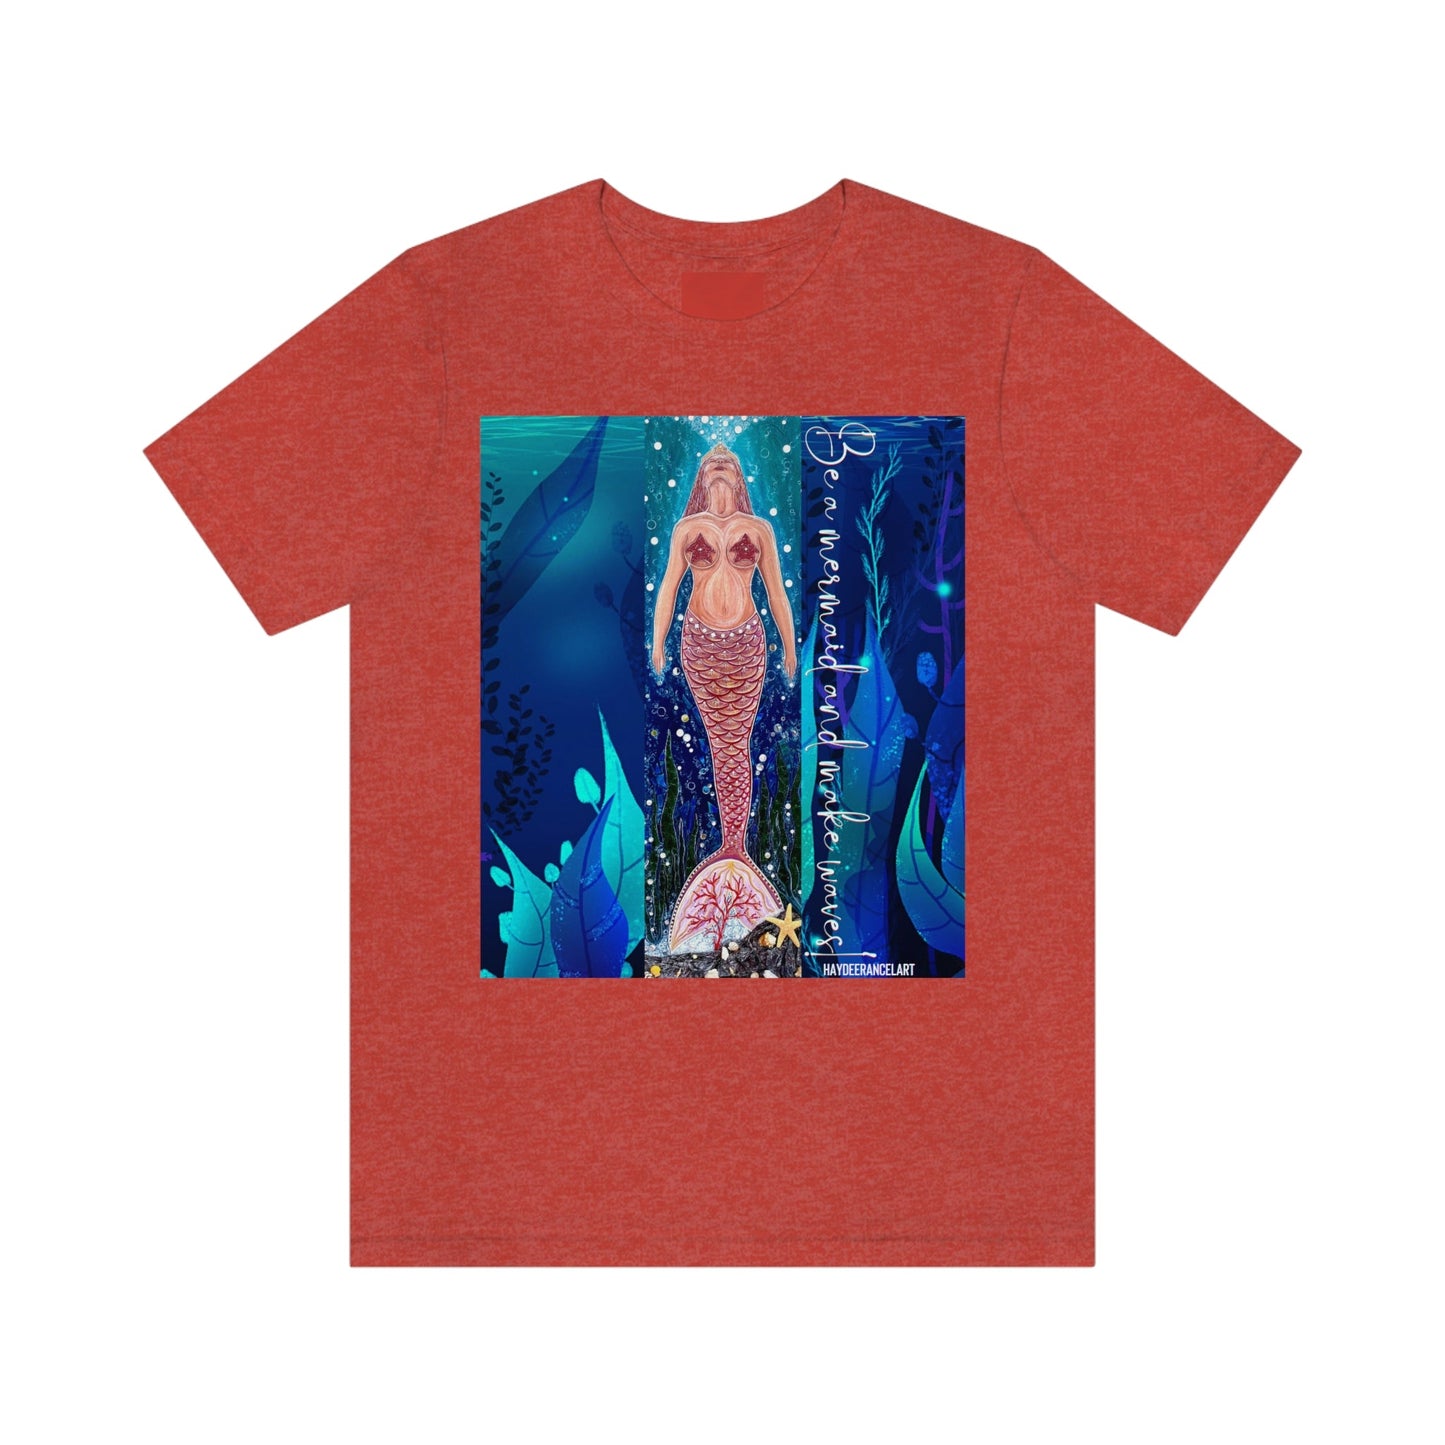 Be A Mermaid And Make Waves Underwater Ocean Reef Charity Pink Unisex Mens Women's Jersey Short Sleeve Crew T-Shirt